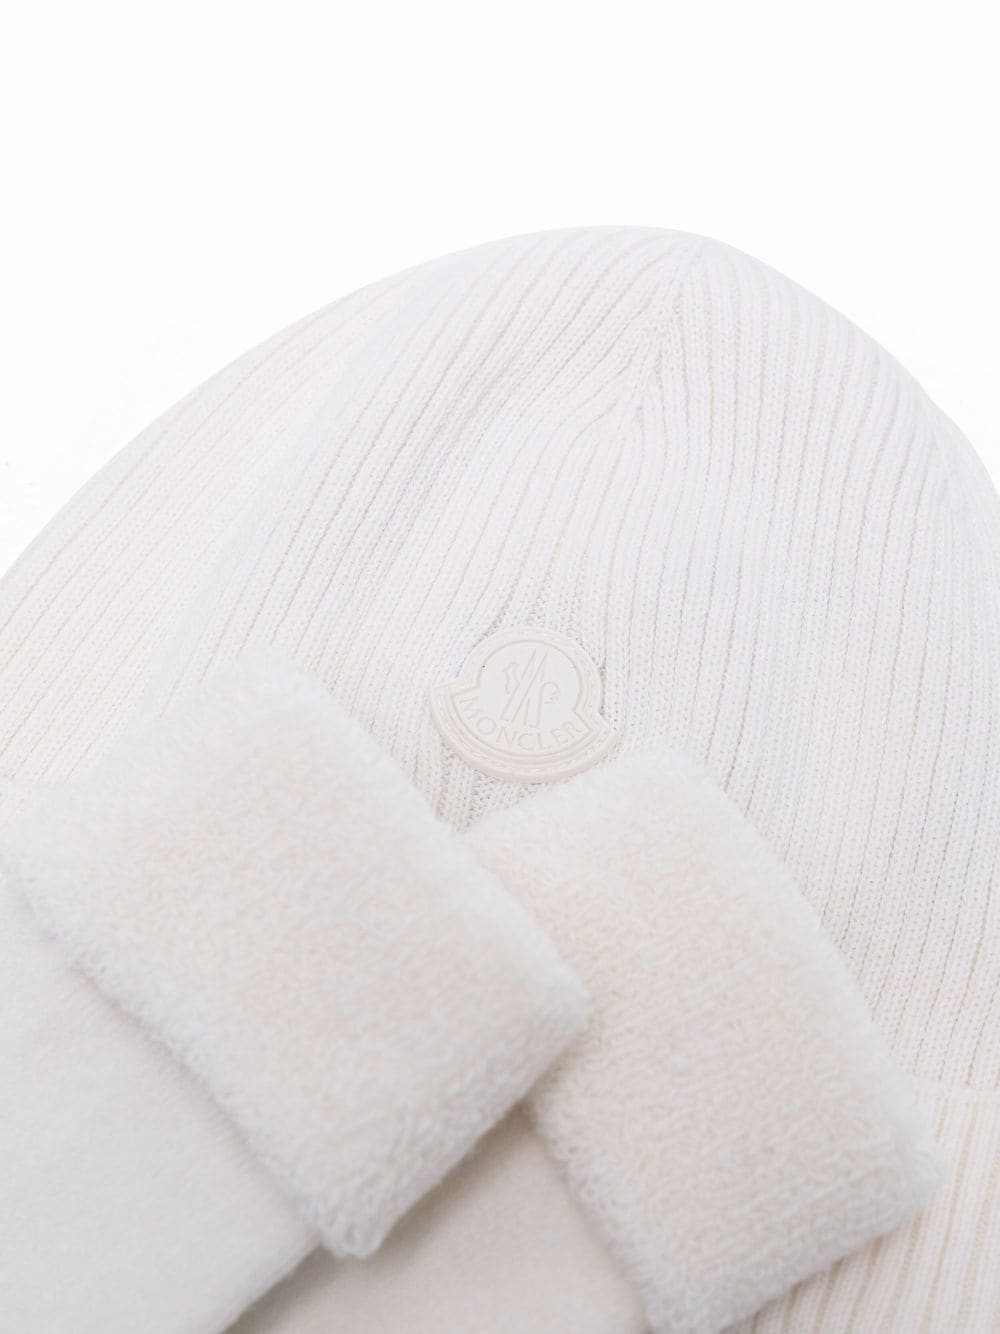 White hat and socks set for newborns